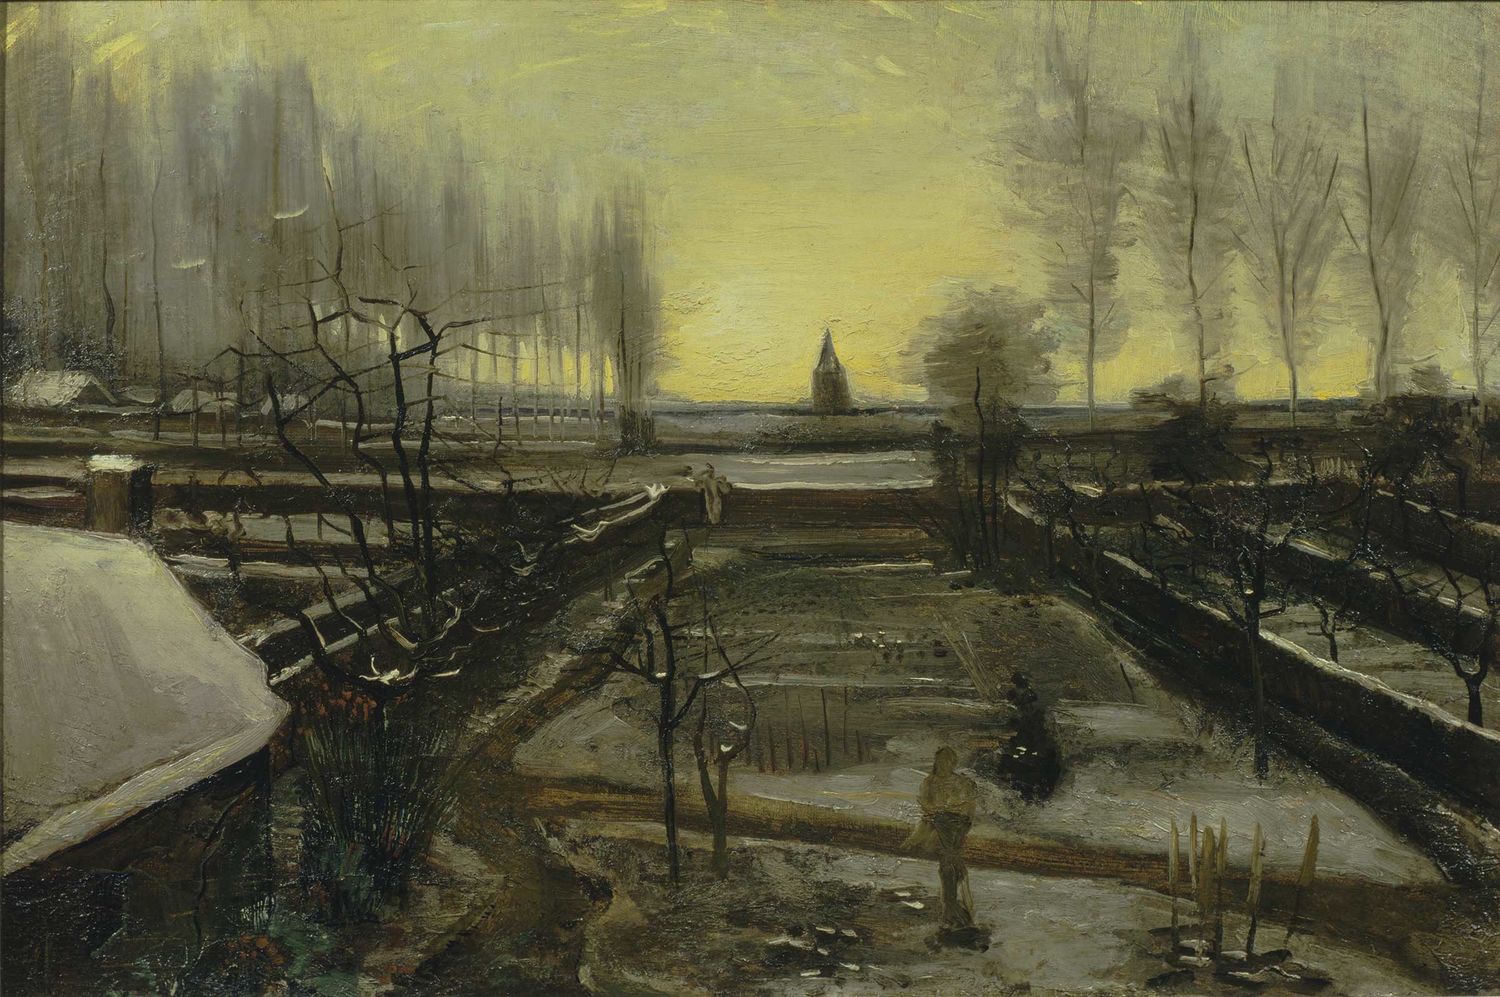 Where in Nuenen did Van Gogh paint?